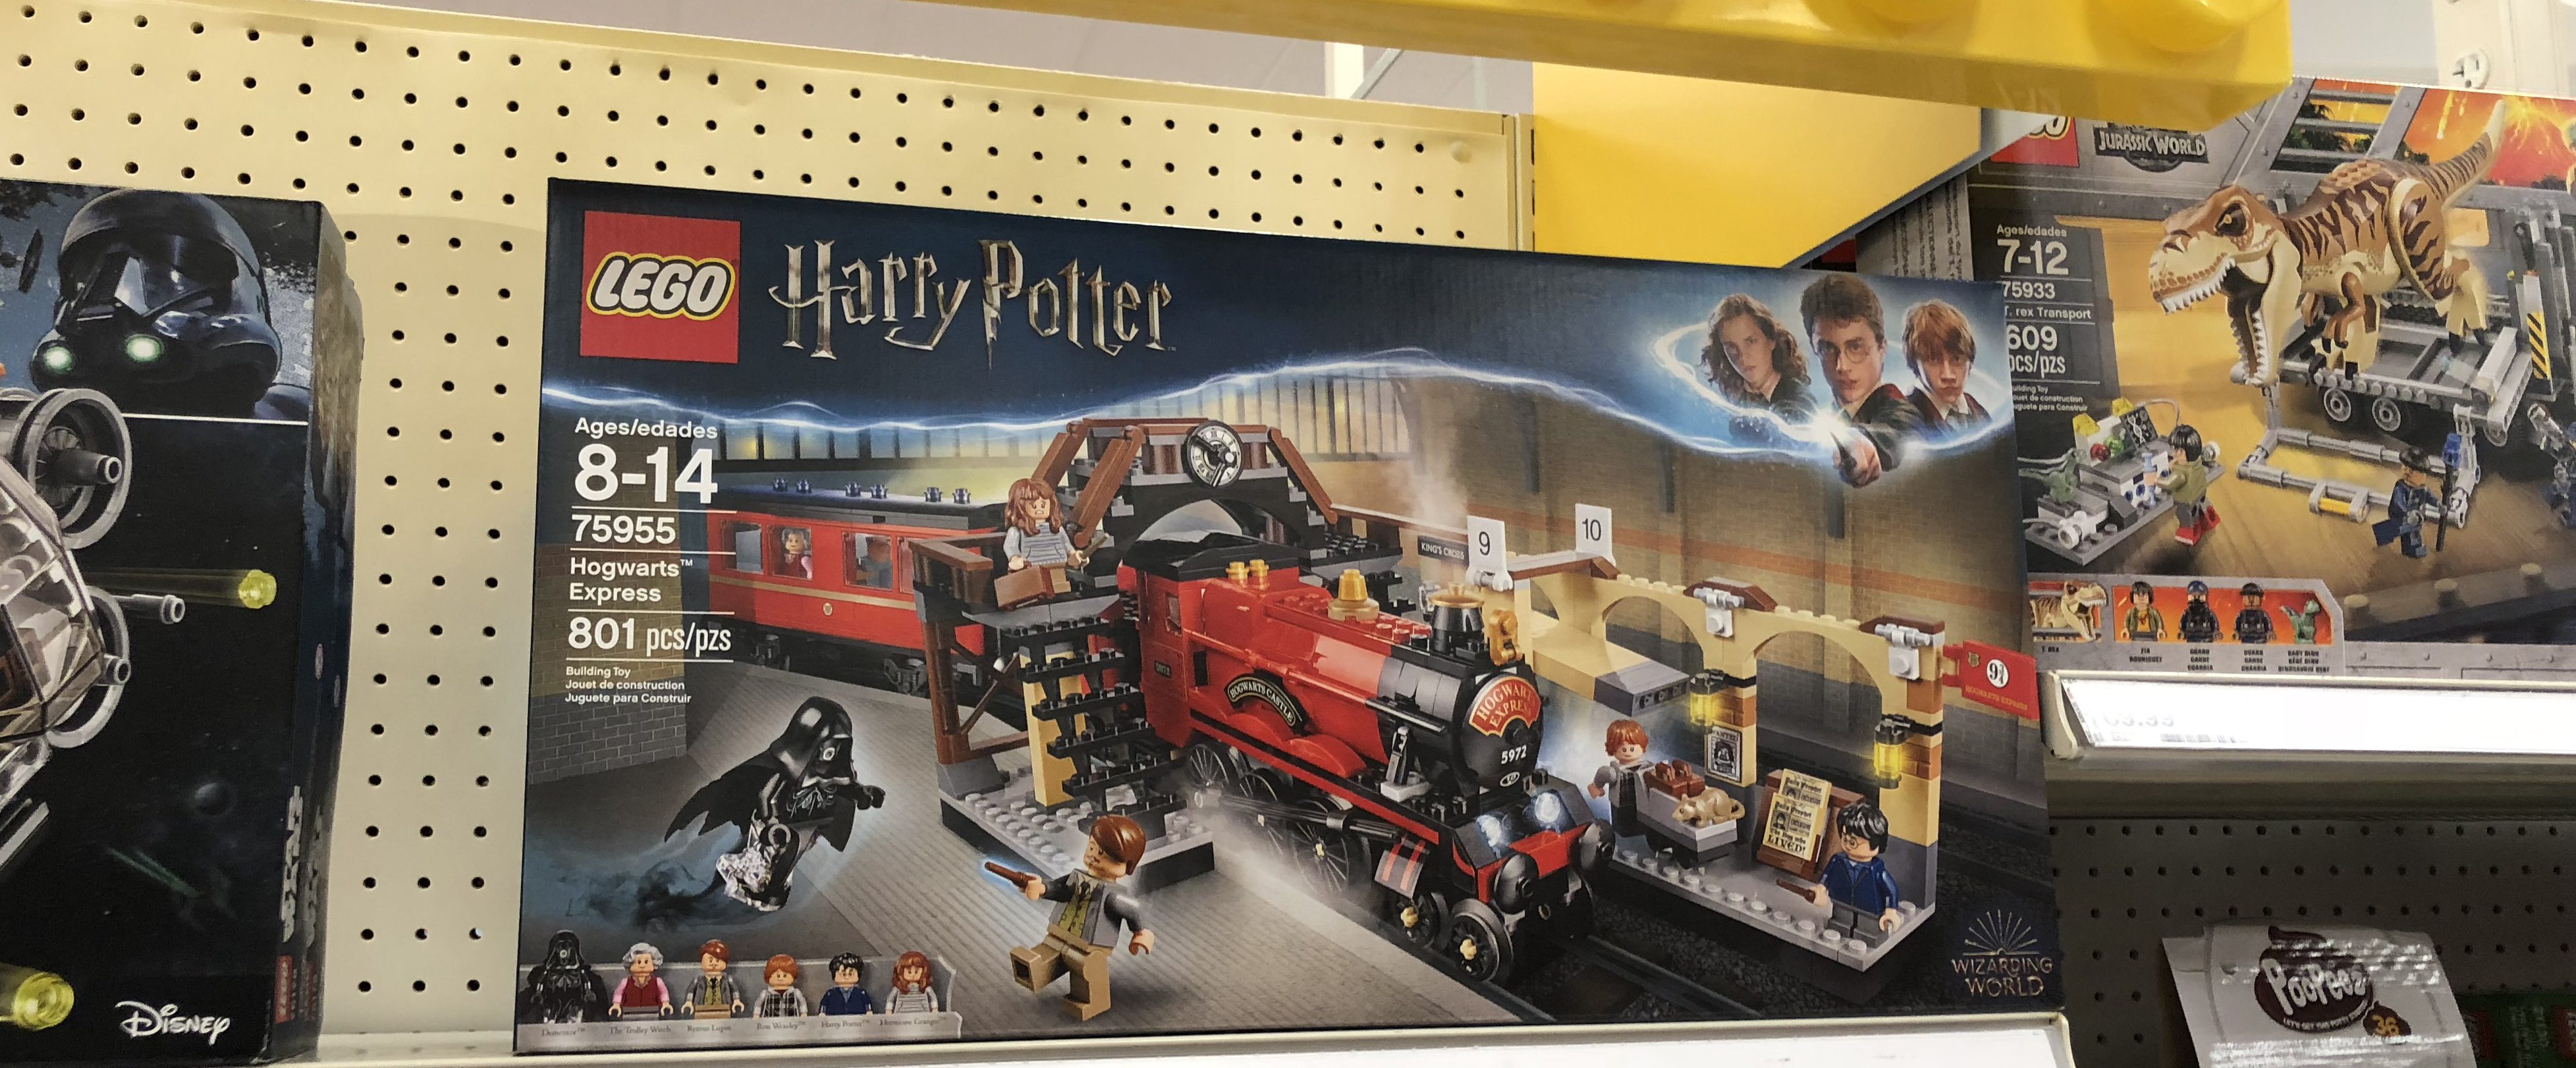 hogwarts express lego target